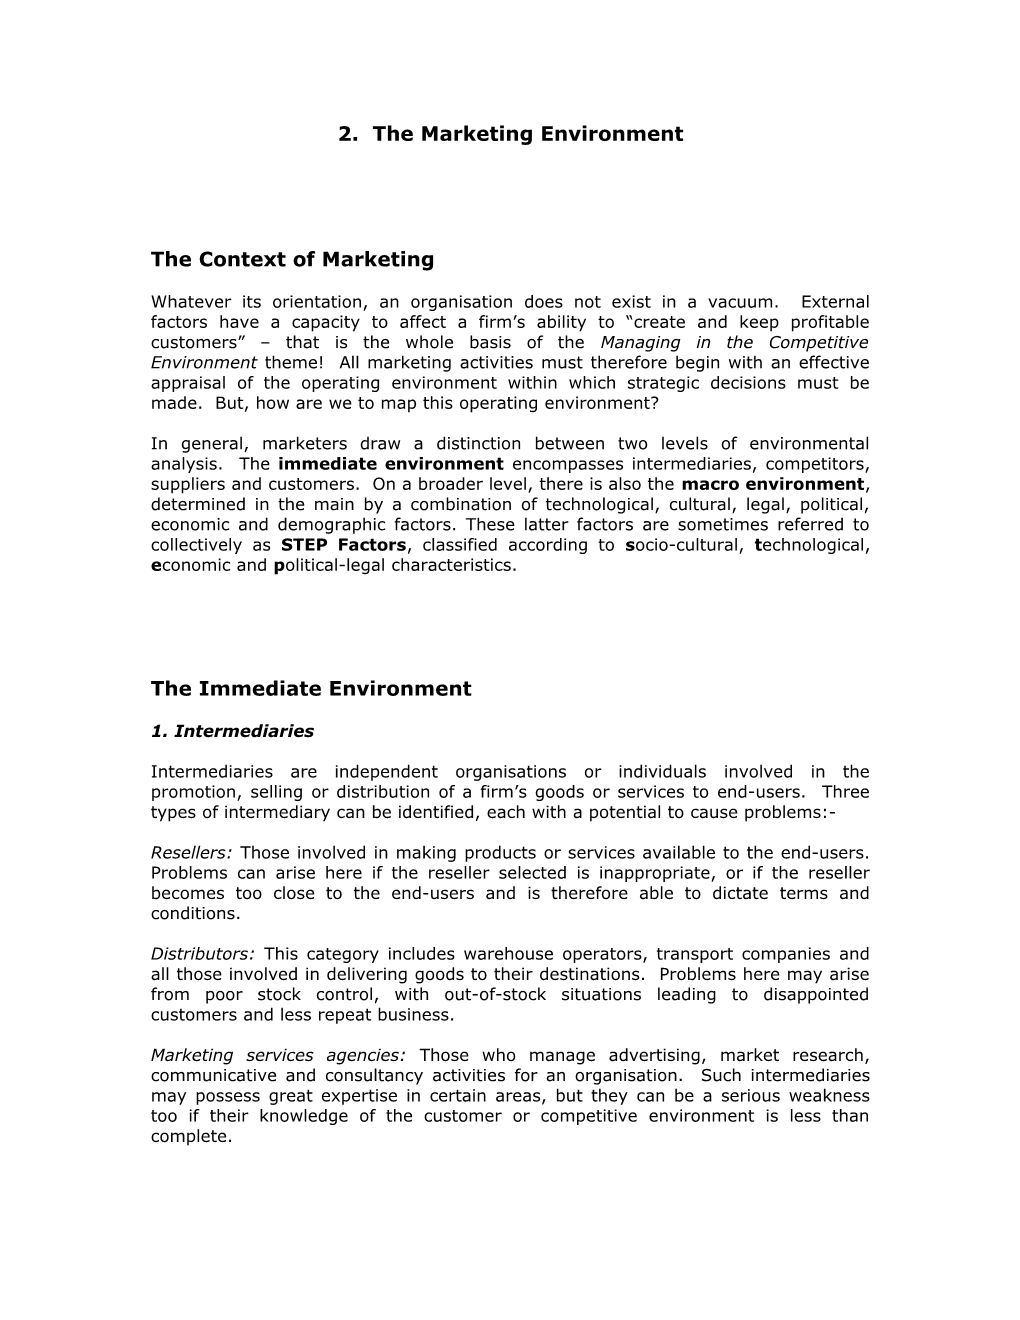 2. the Marketing Environment